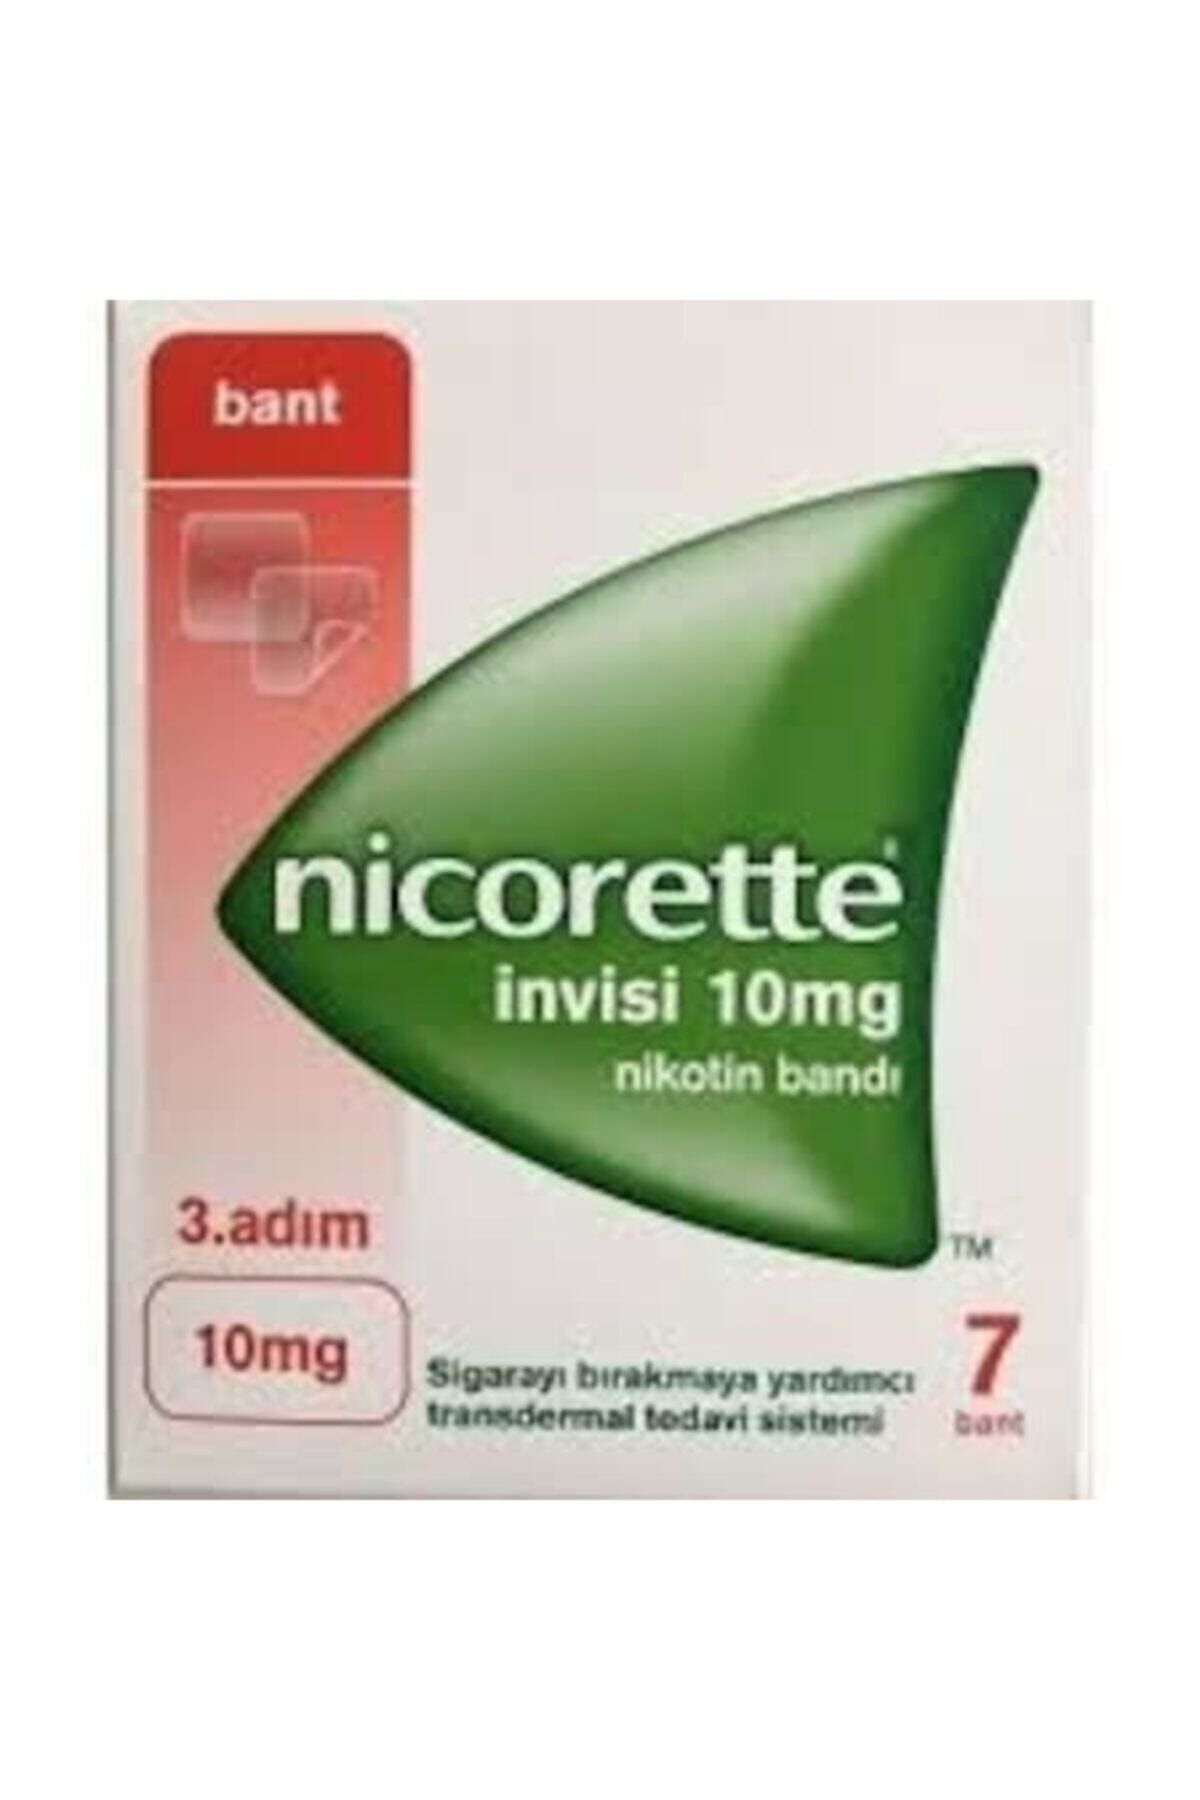 Nicorette Invisi 10mg 3. Adım Nikotin Bandı 8699593813405